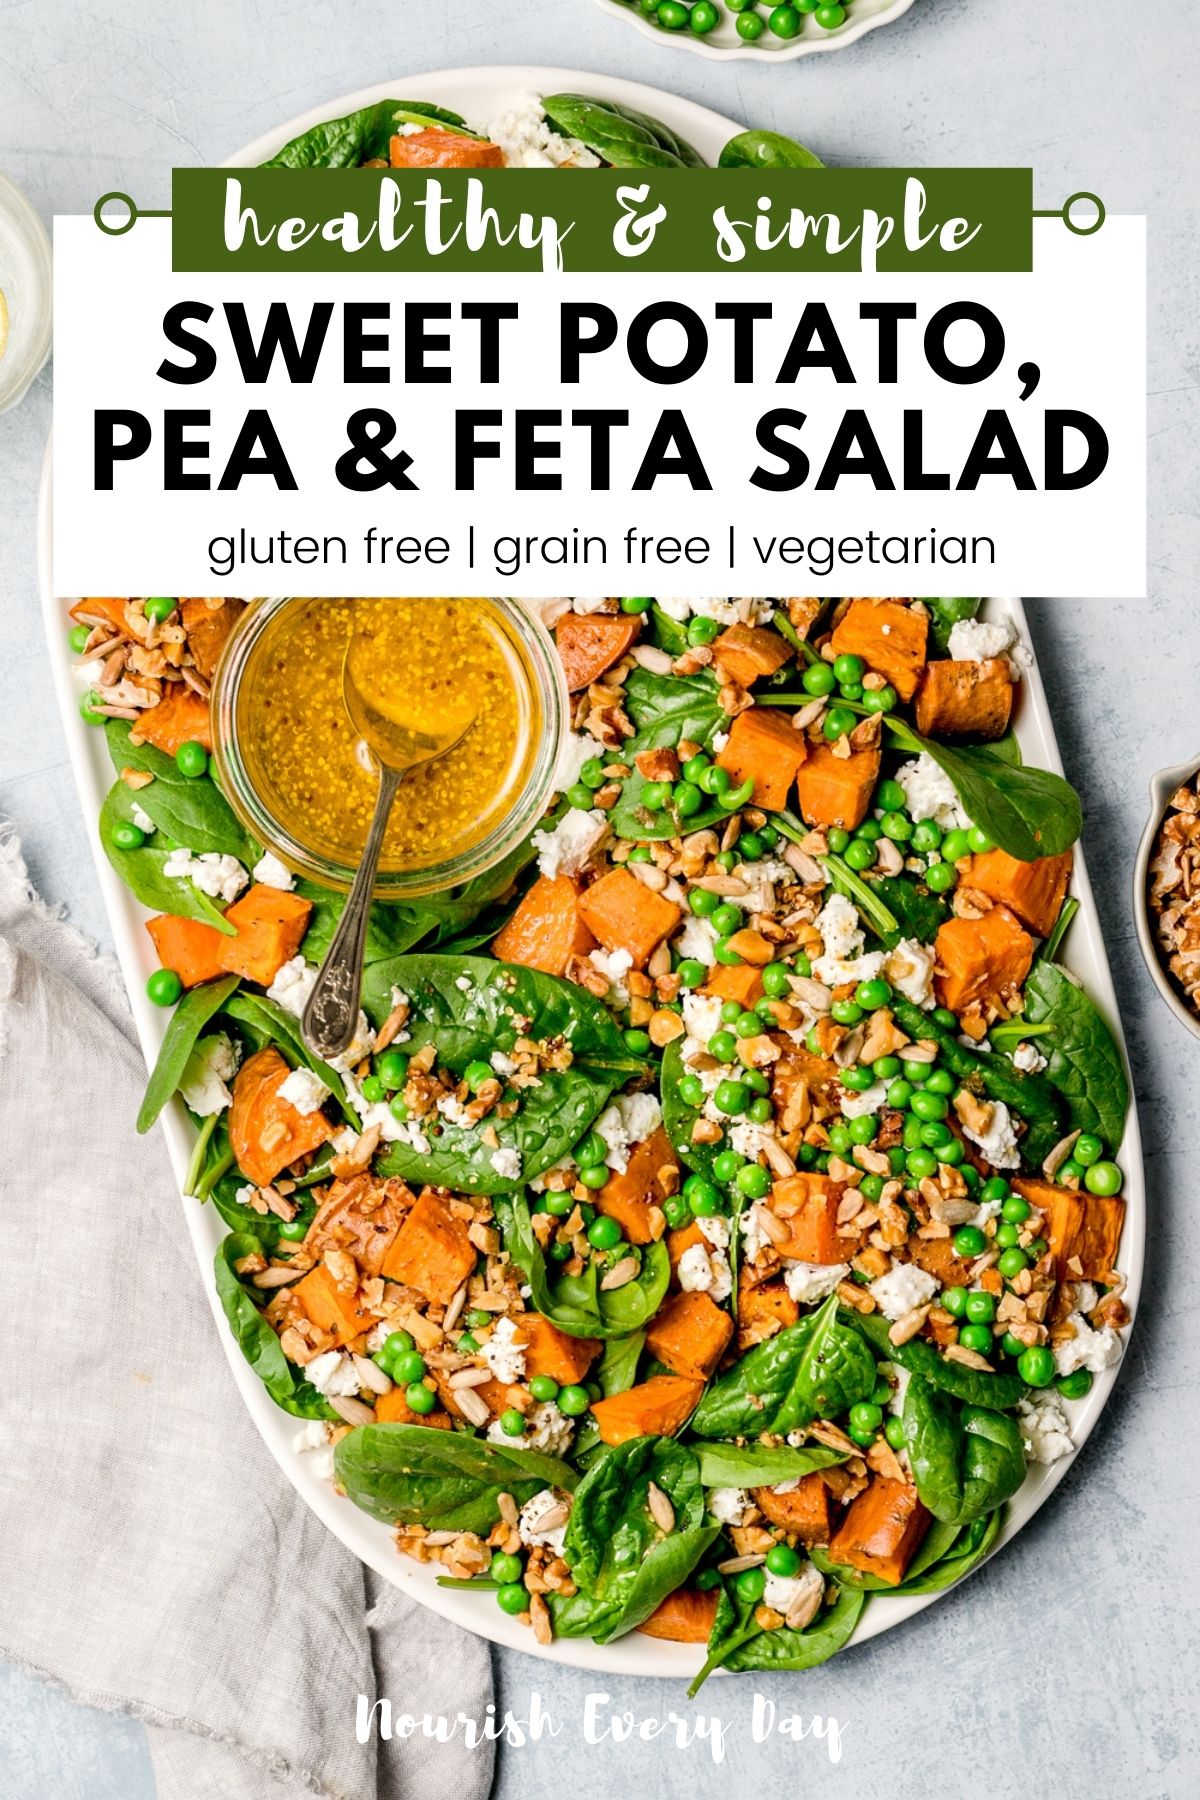 Sweet Potato, Pea and Feta Salad Recipe Pin by Nourish Every Day